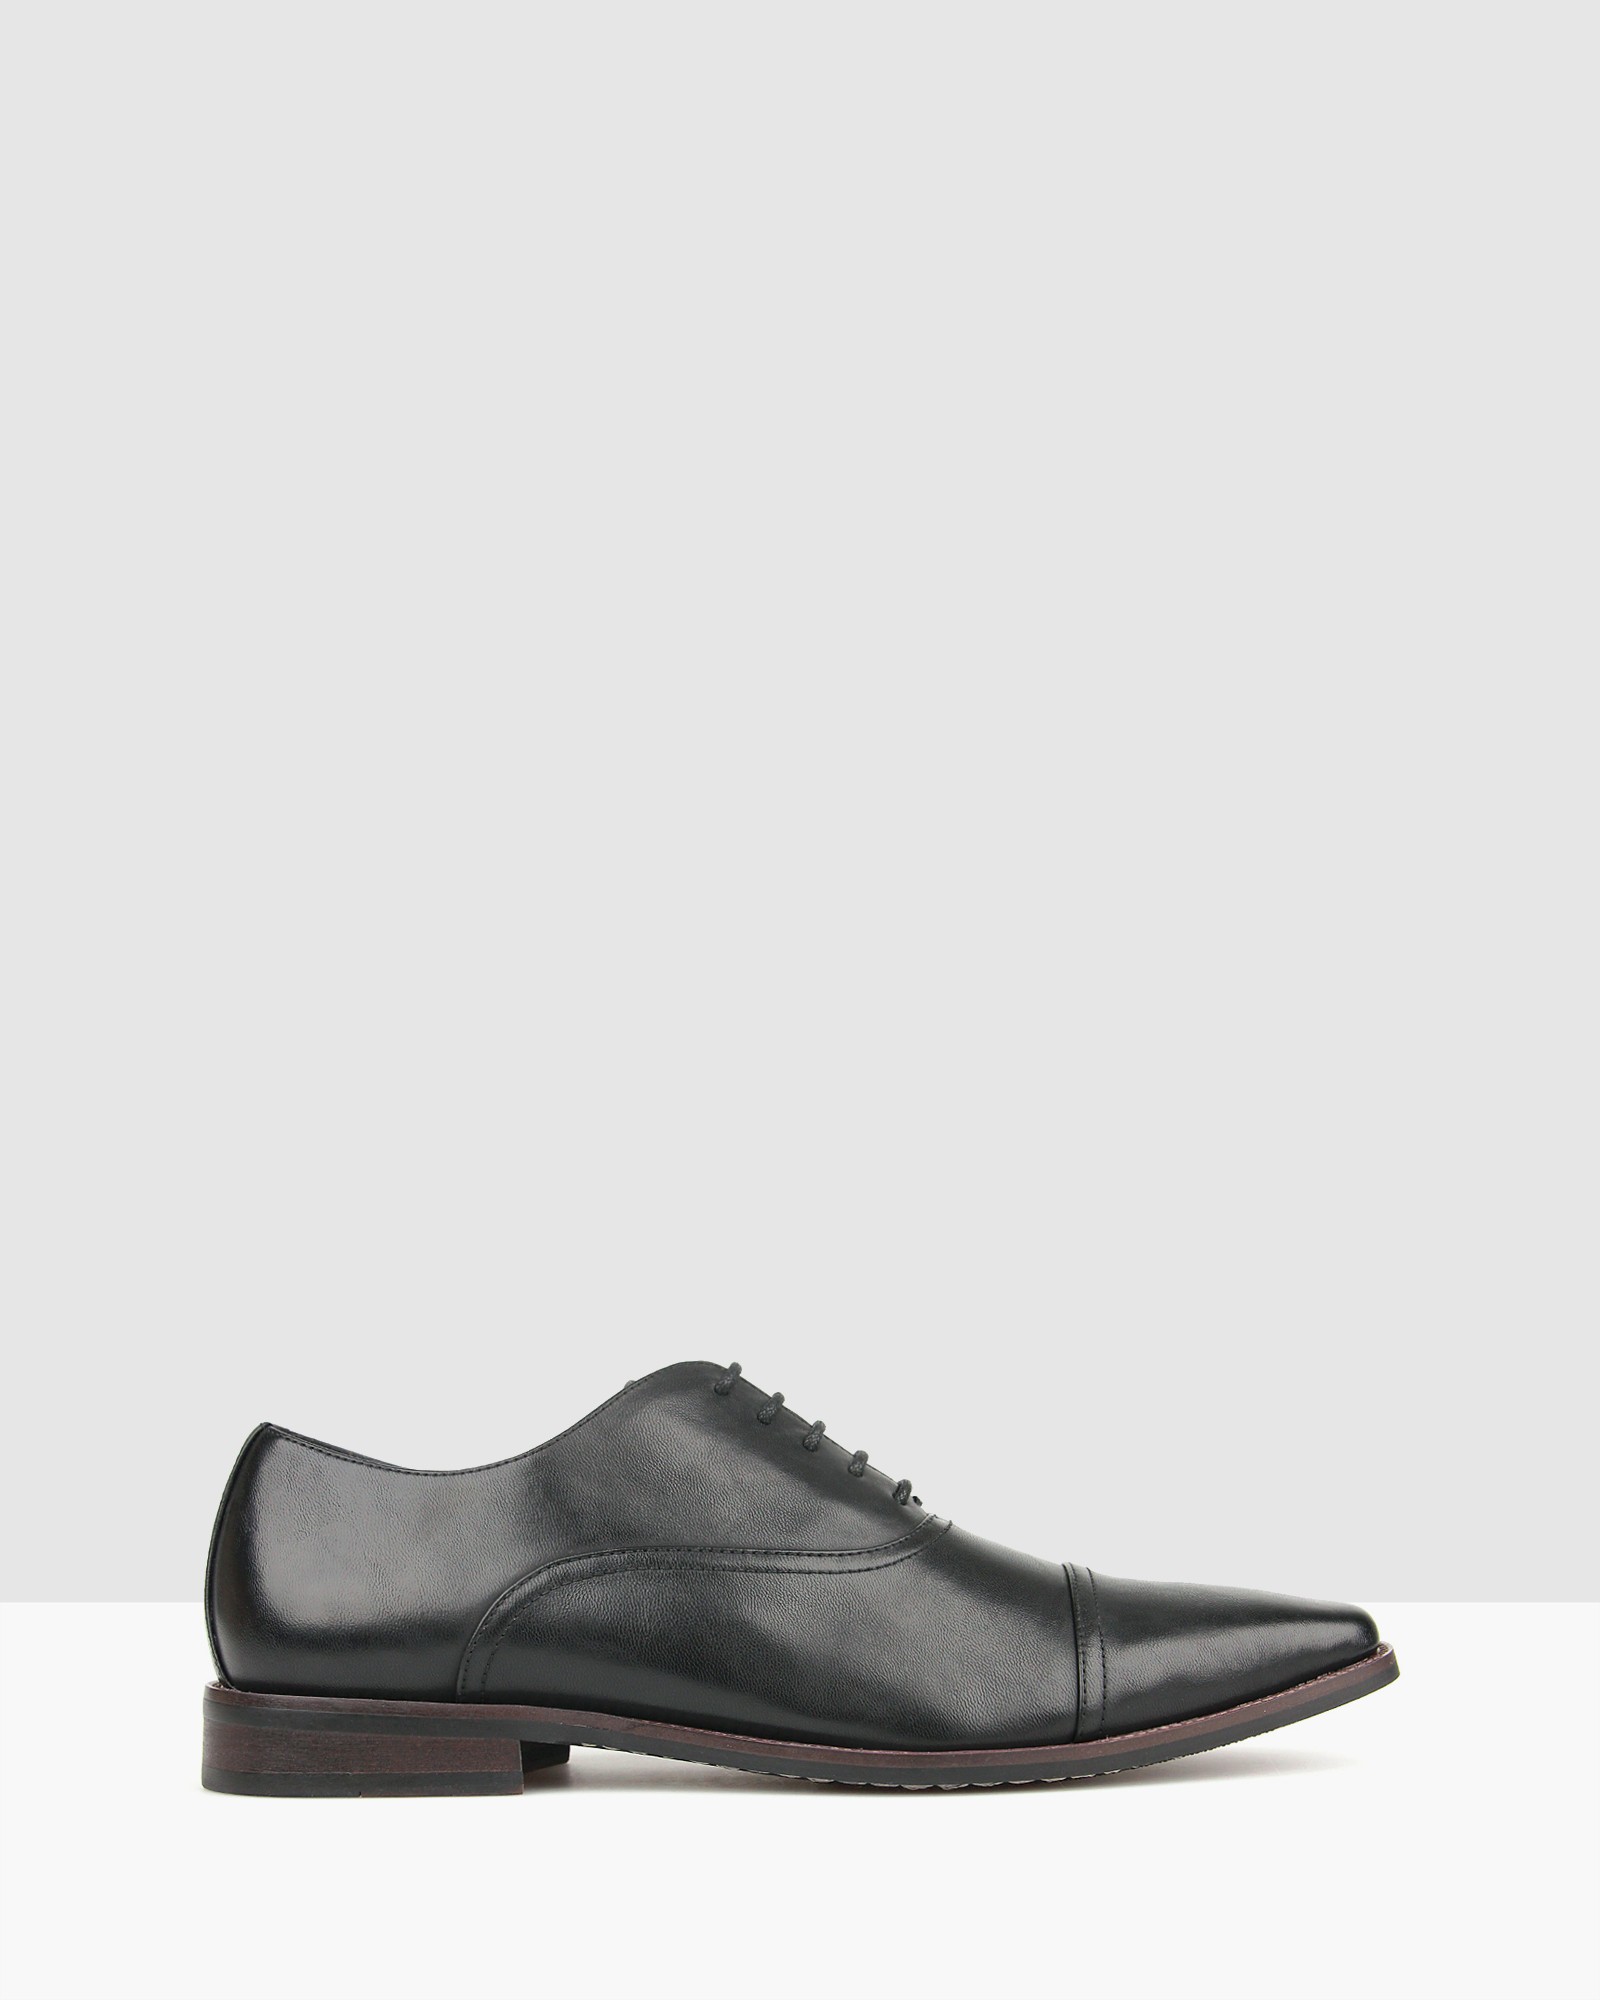 Captain Oxford Dress Shoes Black by Betts | ShoeSales